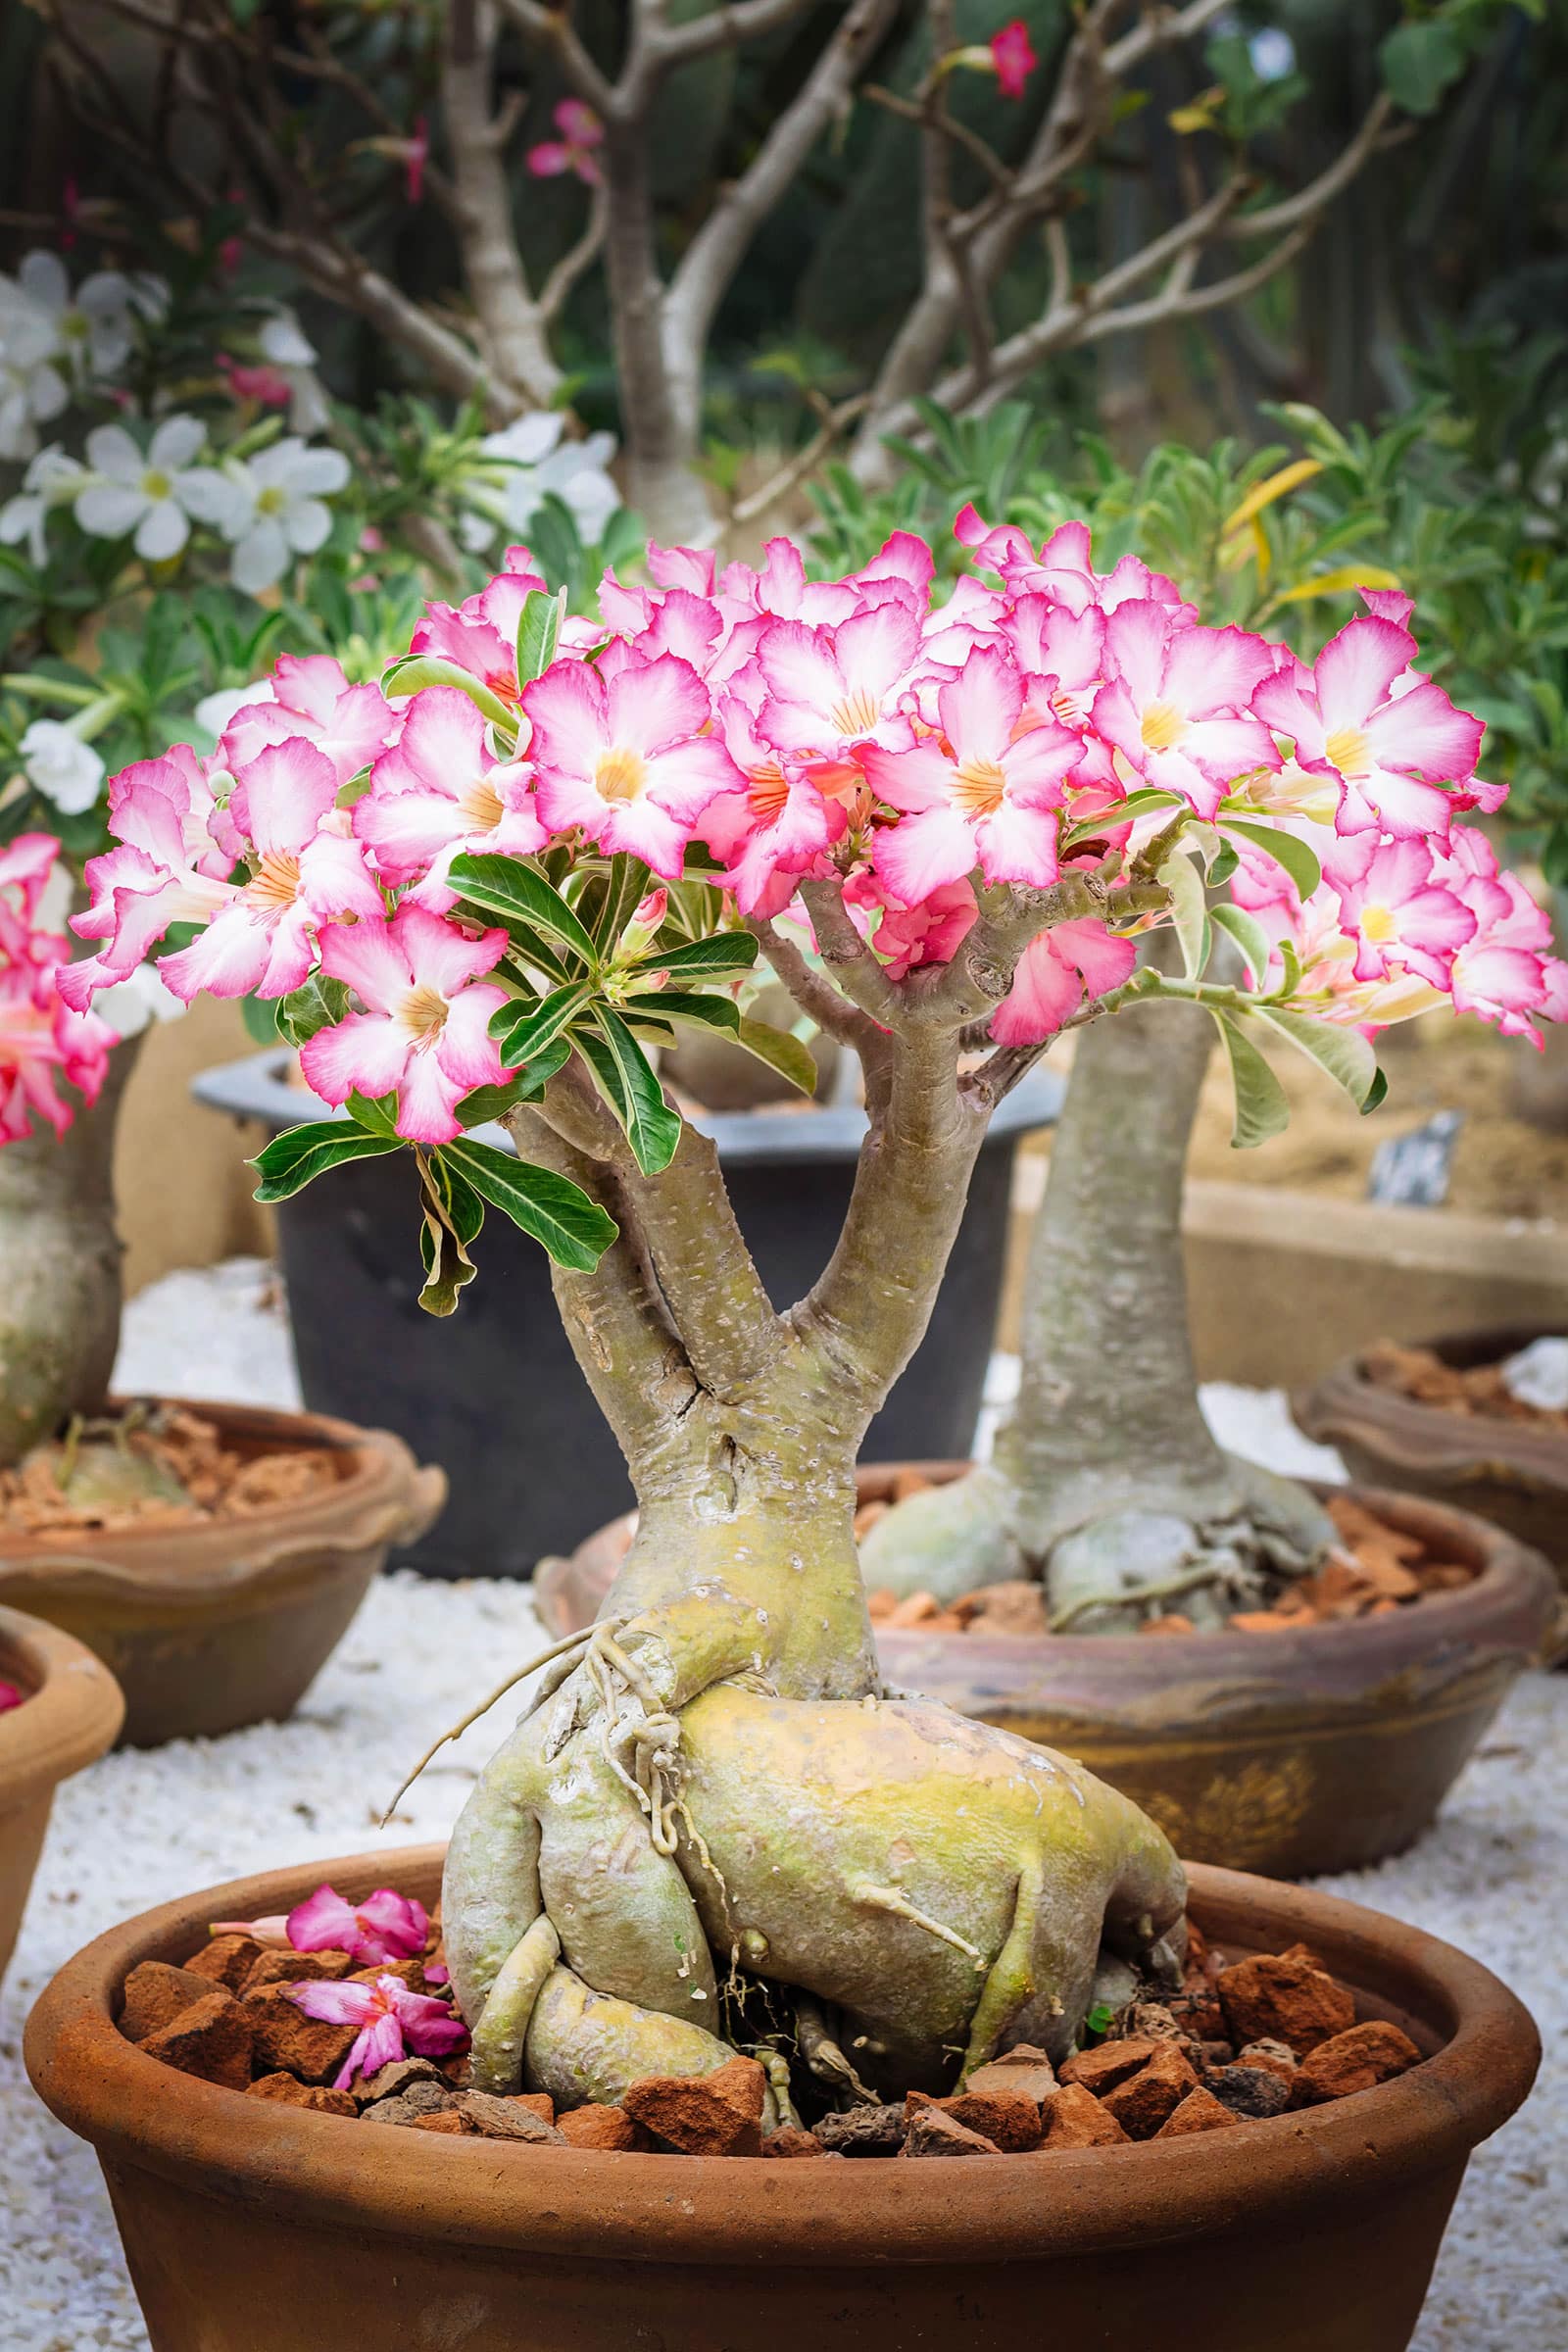 Adenium obesum (desert rose) bonsai with pink and white flowers